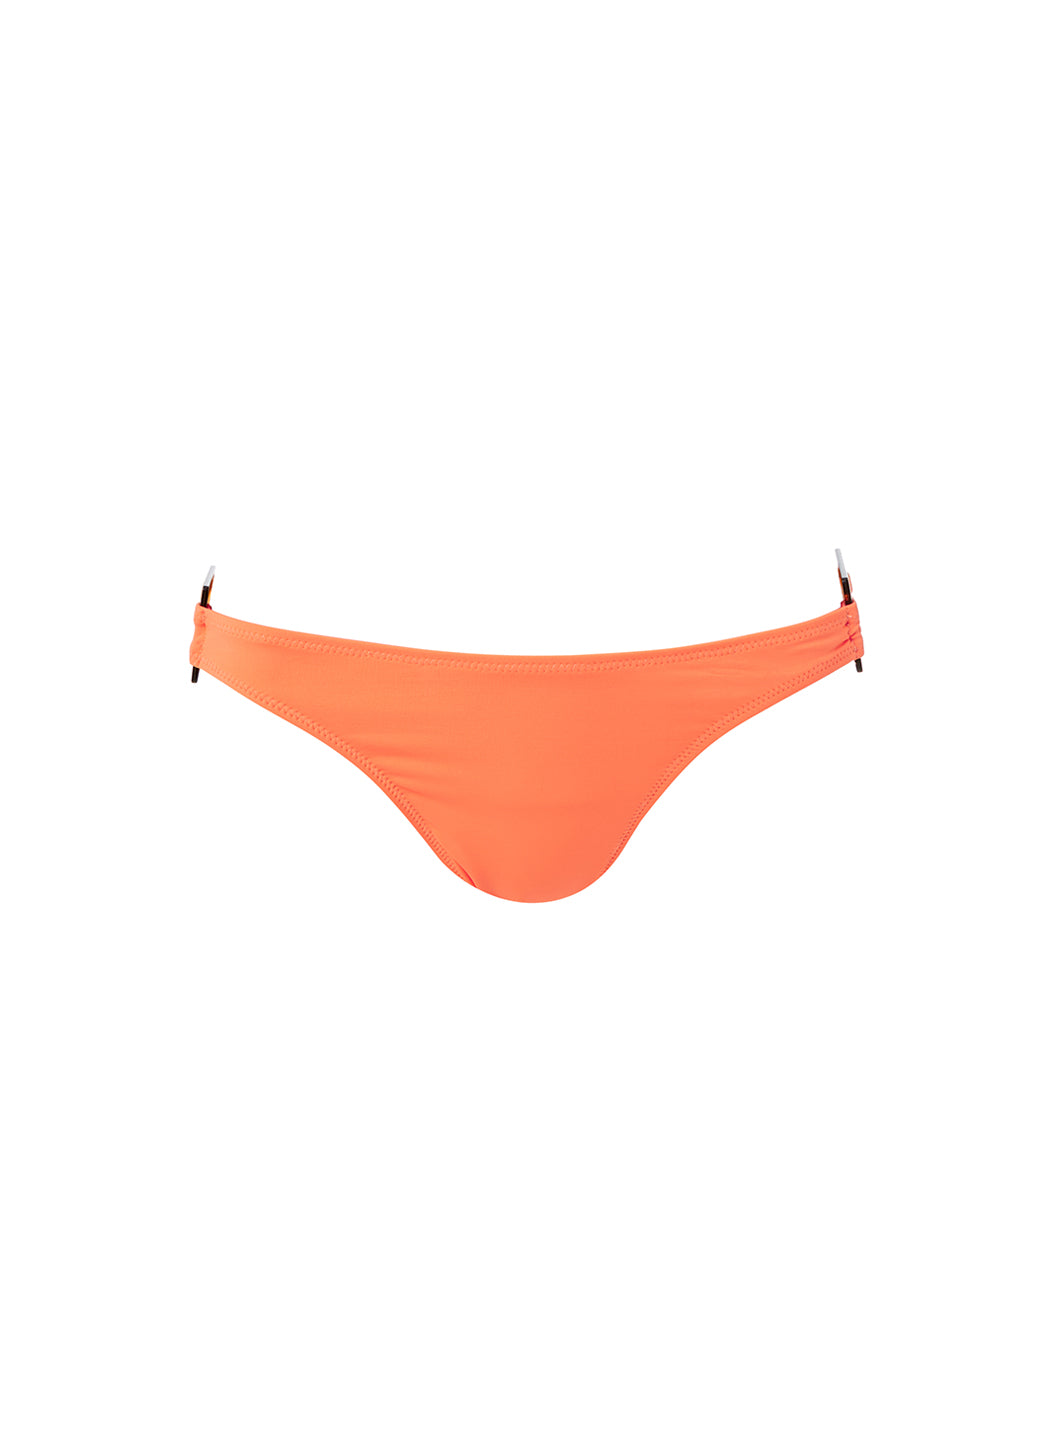 Melissa Odabash Paris Orange Hipster Bikini Bottom - 2024 Collection